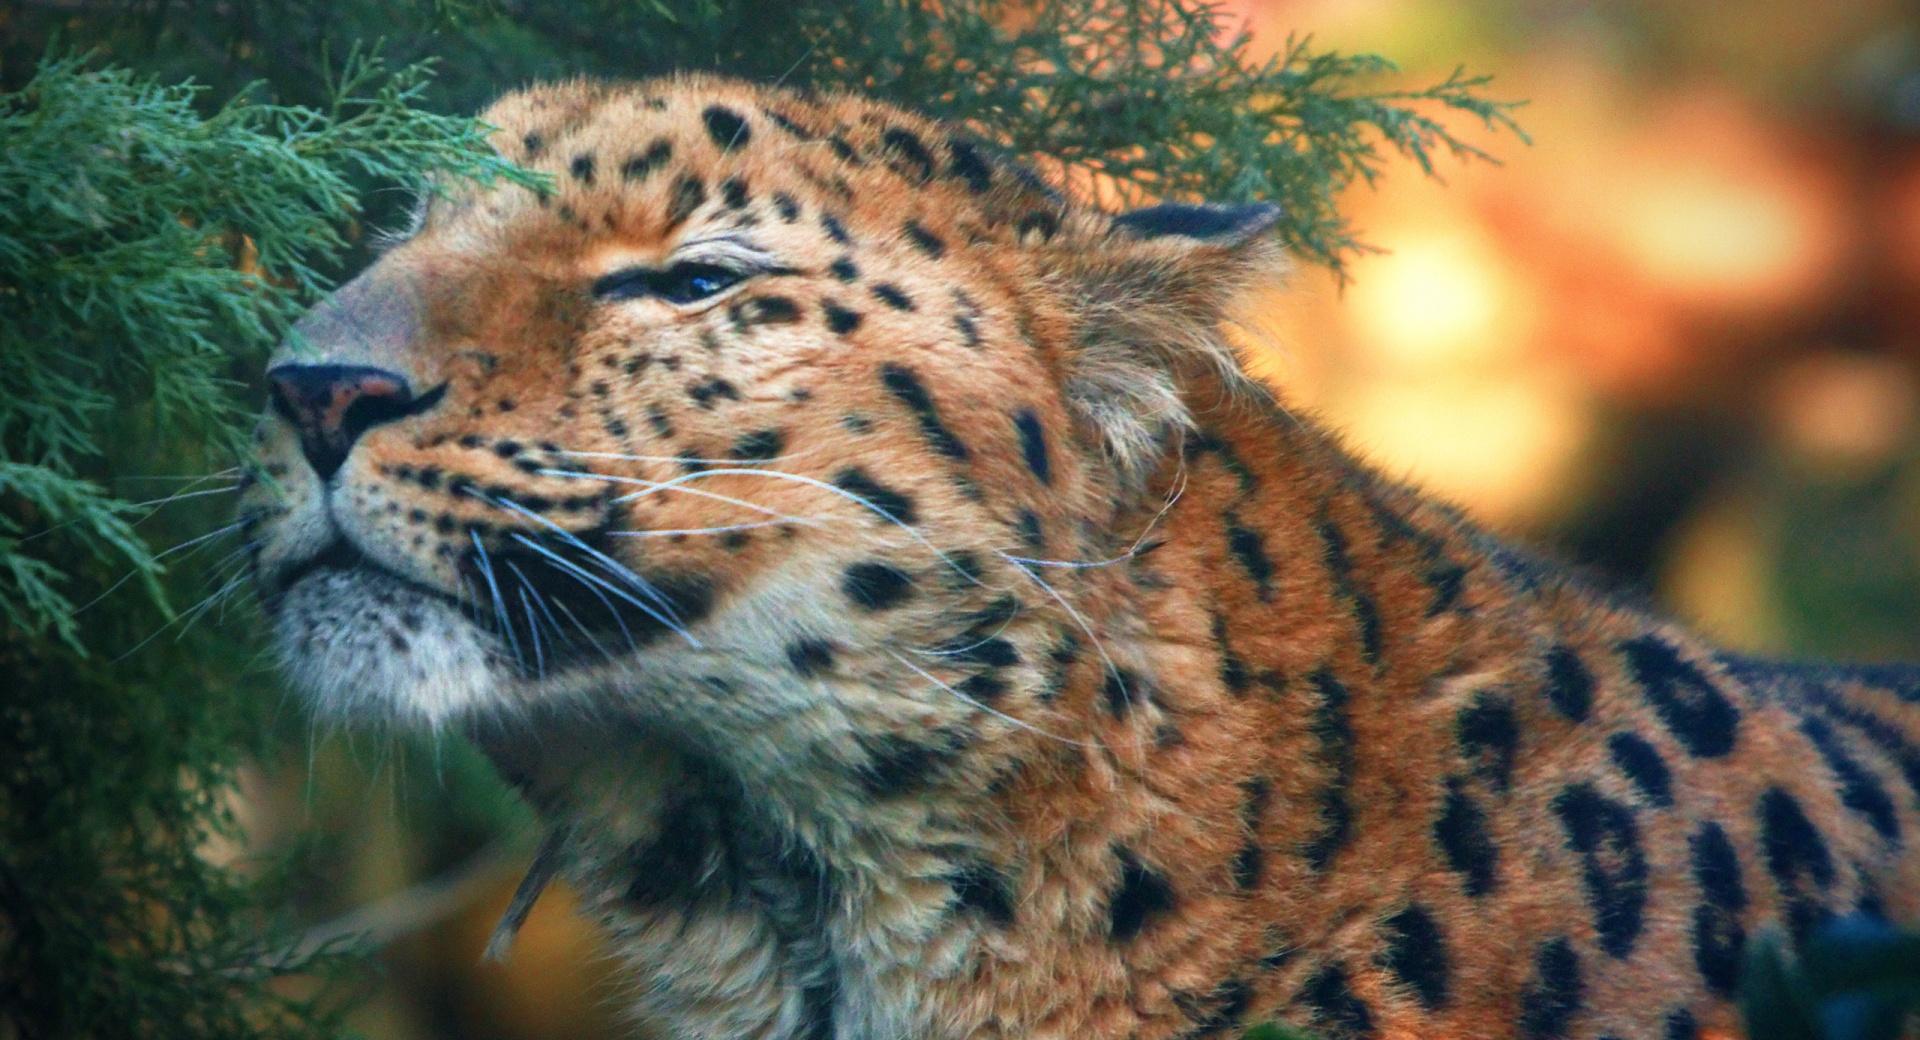 Cute Amur Leopard wallpapers HD quality